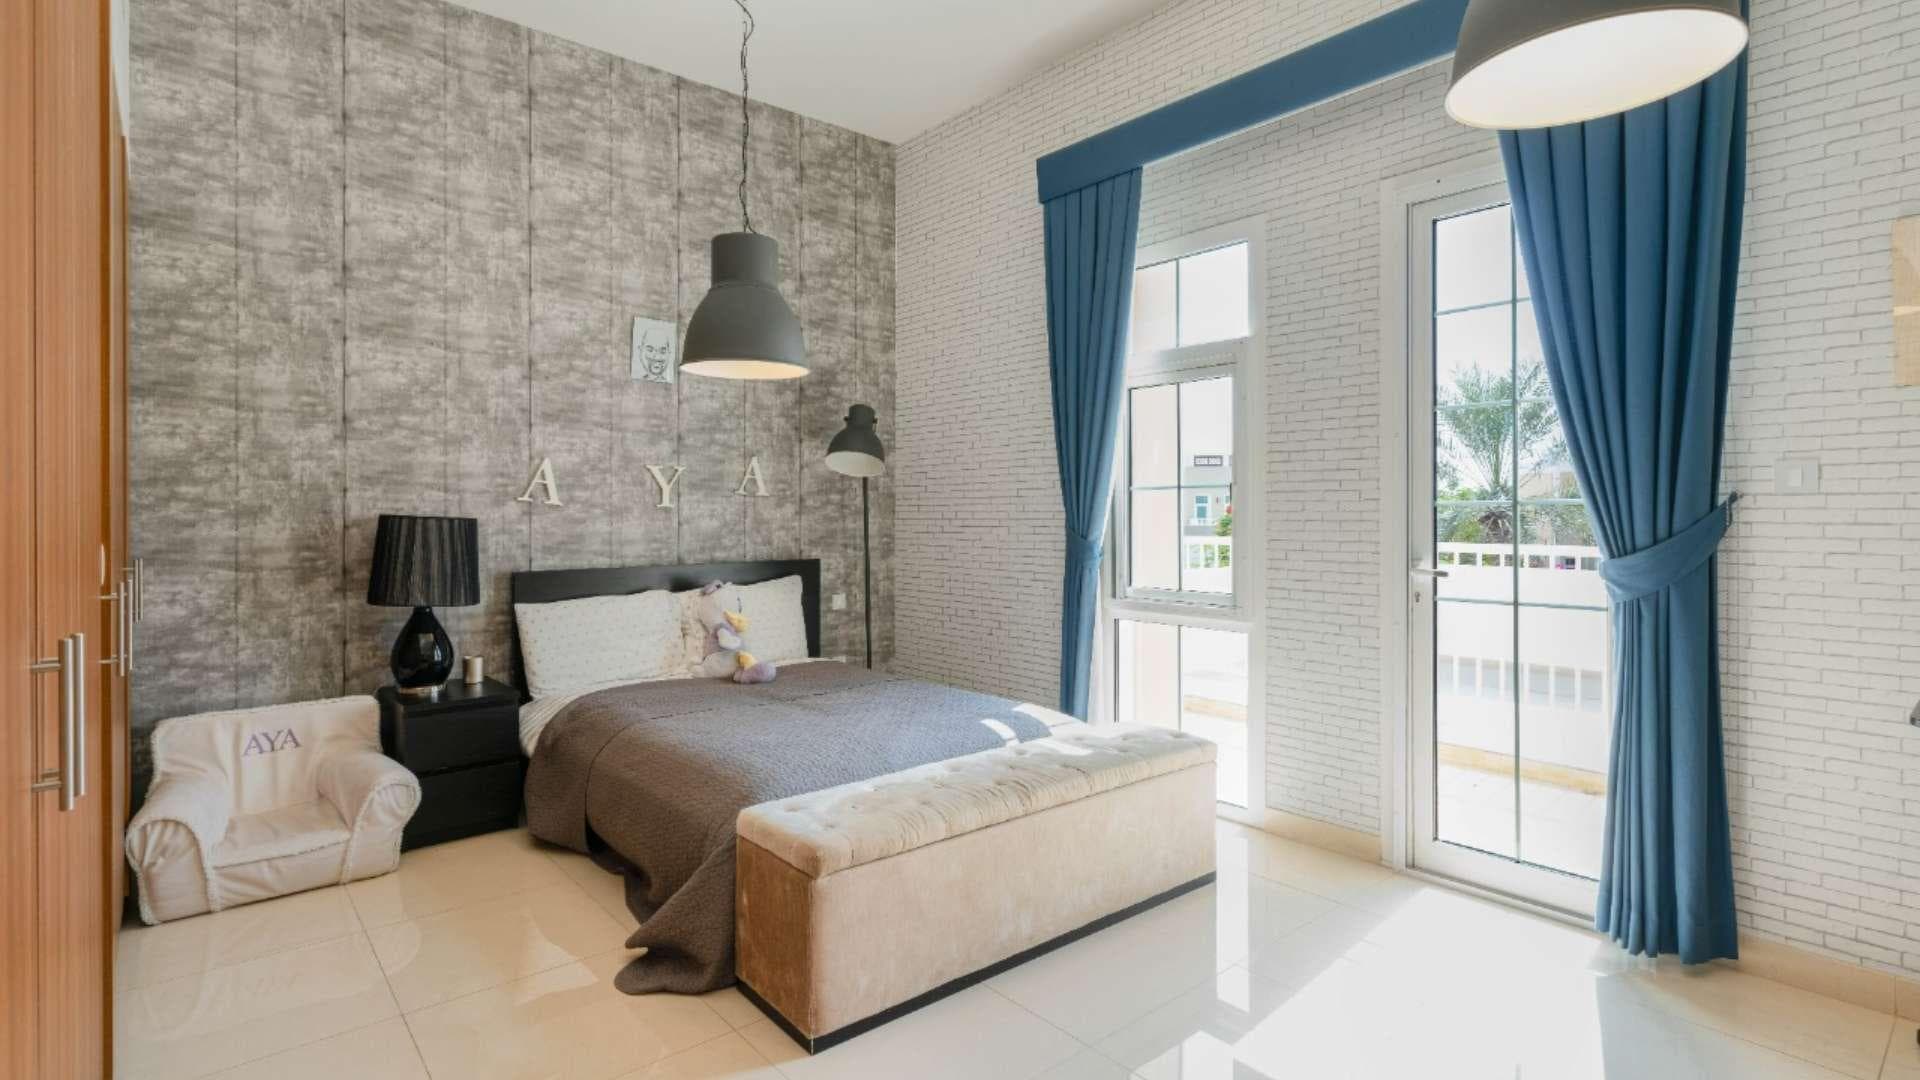 5 Bedroom Villa For Sale Rahat Lp15148 2052b36852a43600.jpg